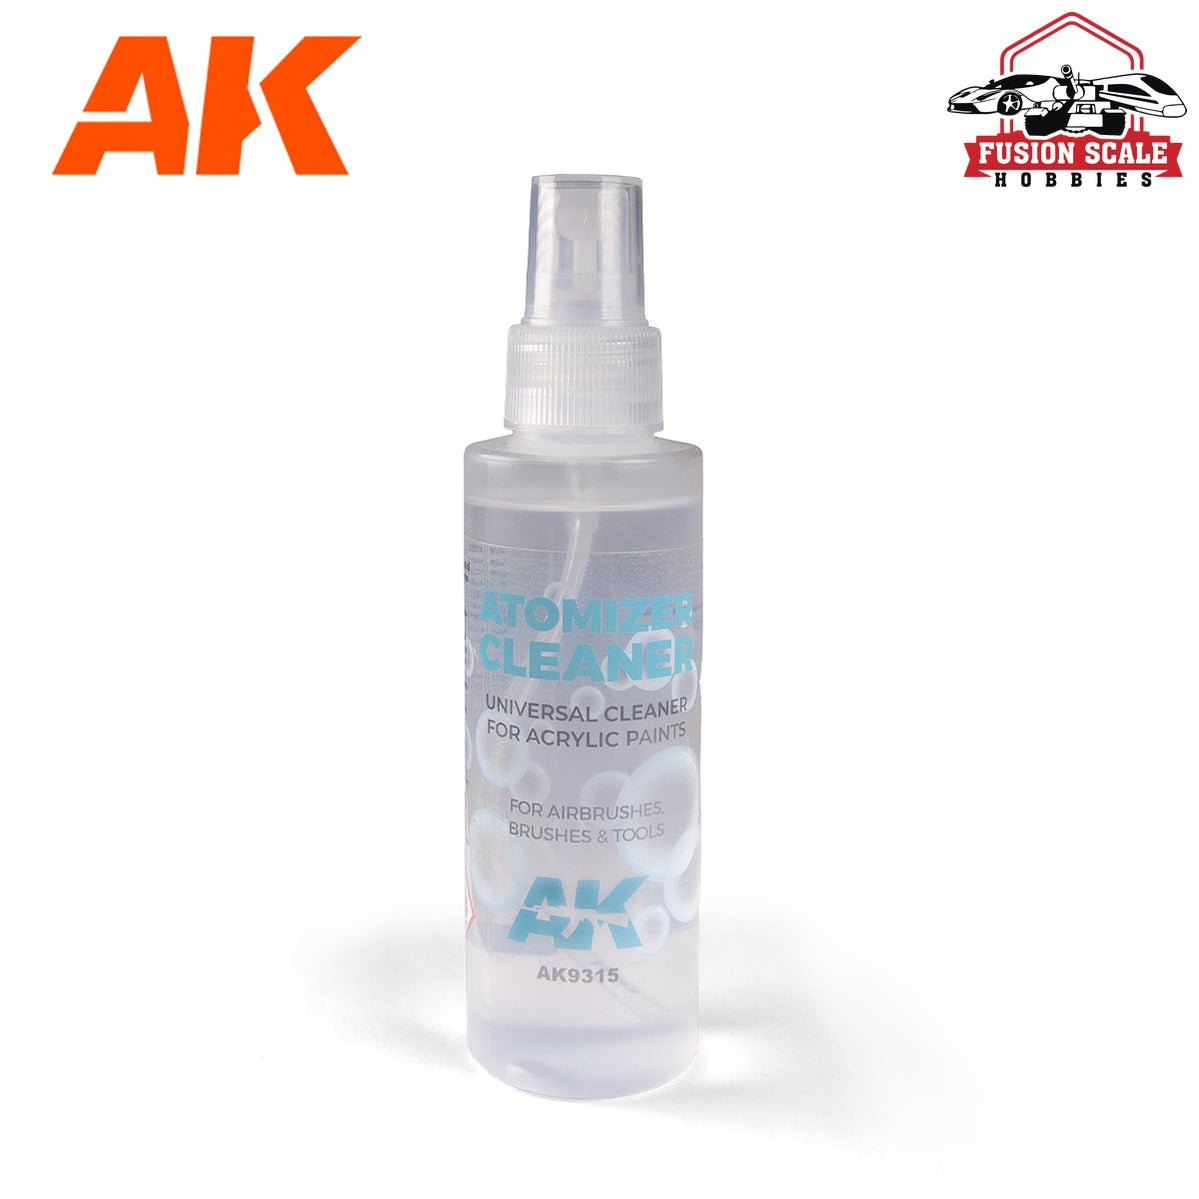 AK Interactive 3rd Generation Black Acrylic Primer 100ml Bottle – Fusion  Scale Hobbies